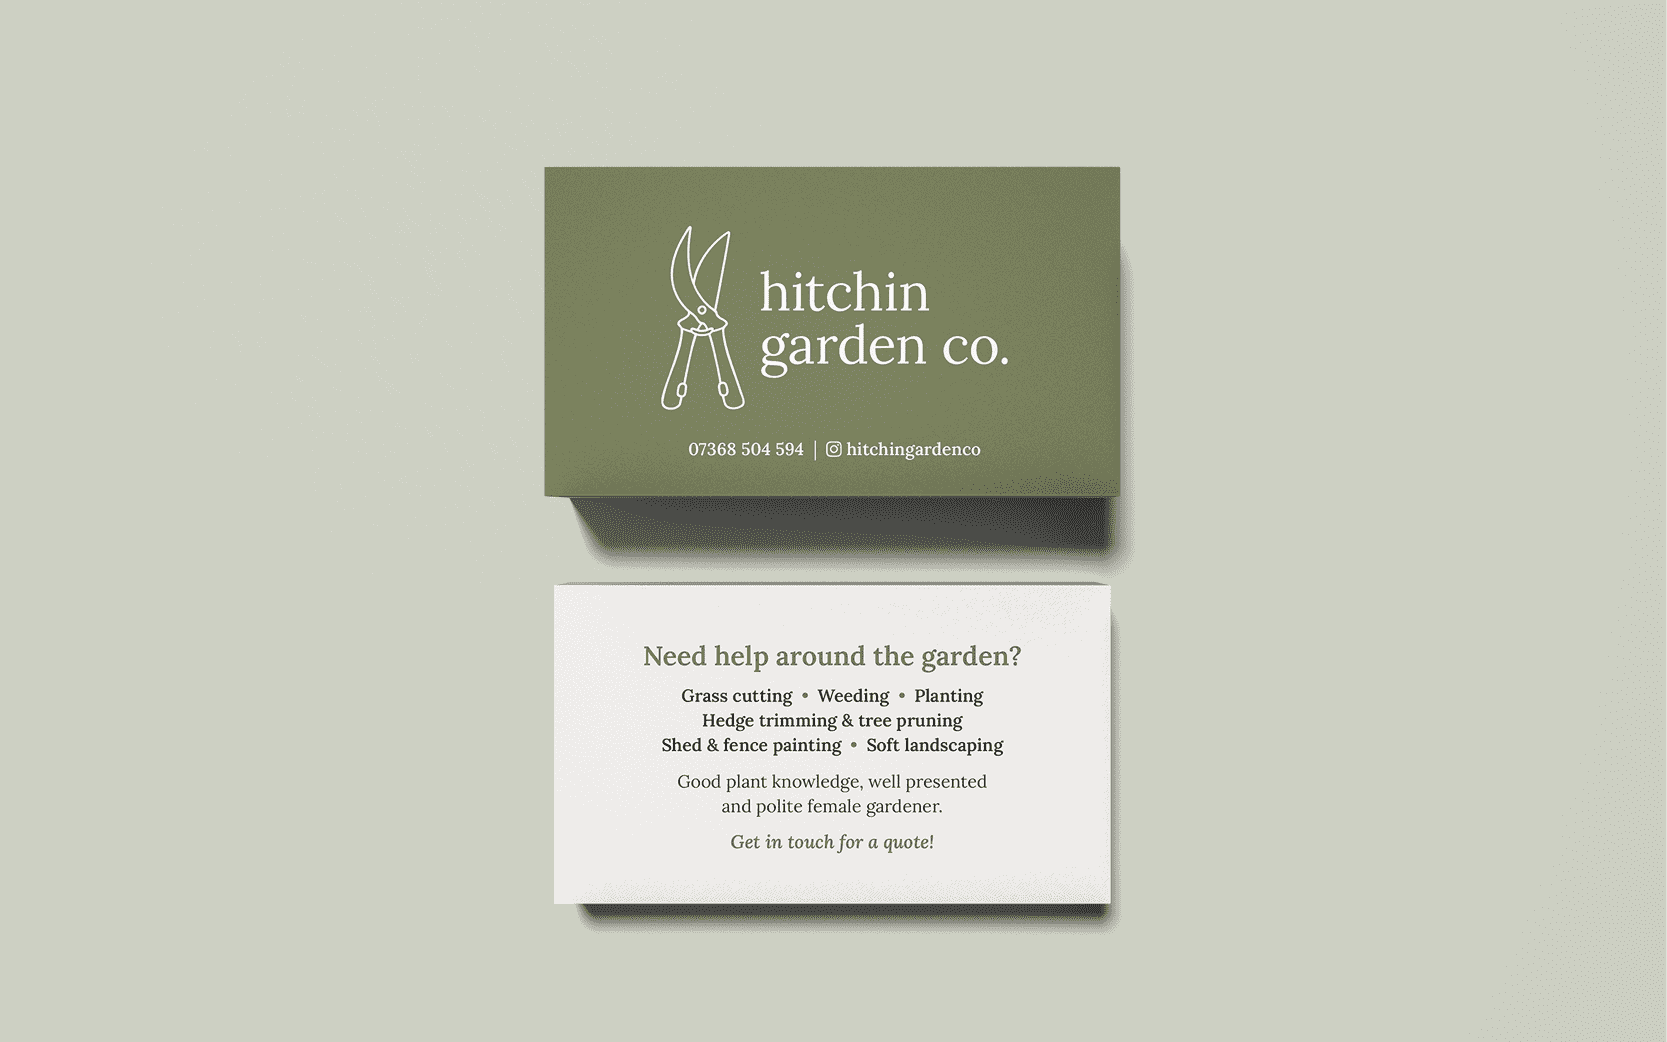 Hitchin Garden Co. Business Card Creative